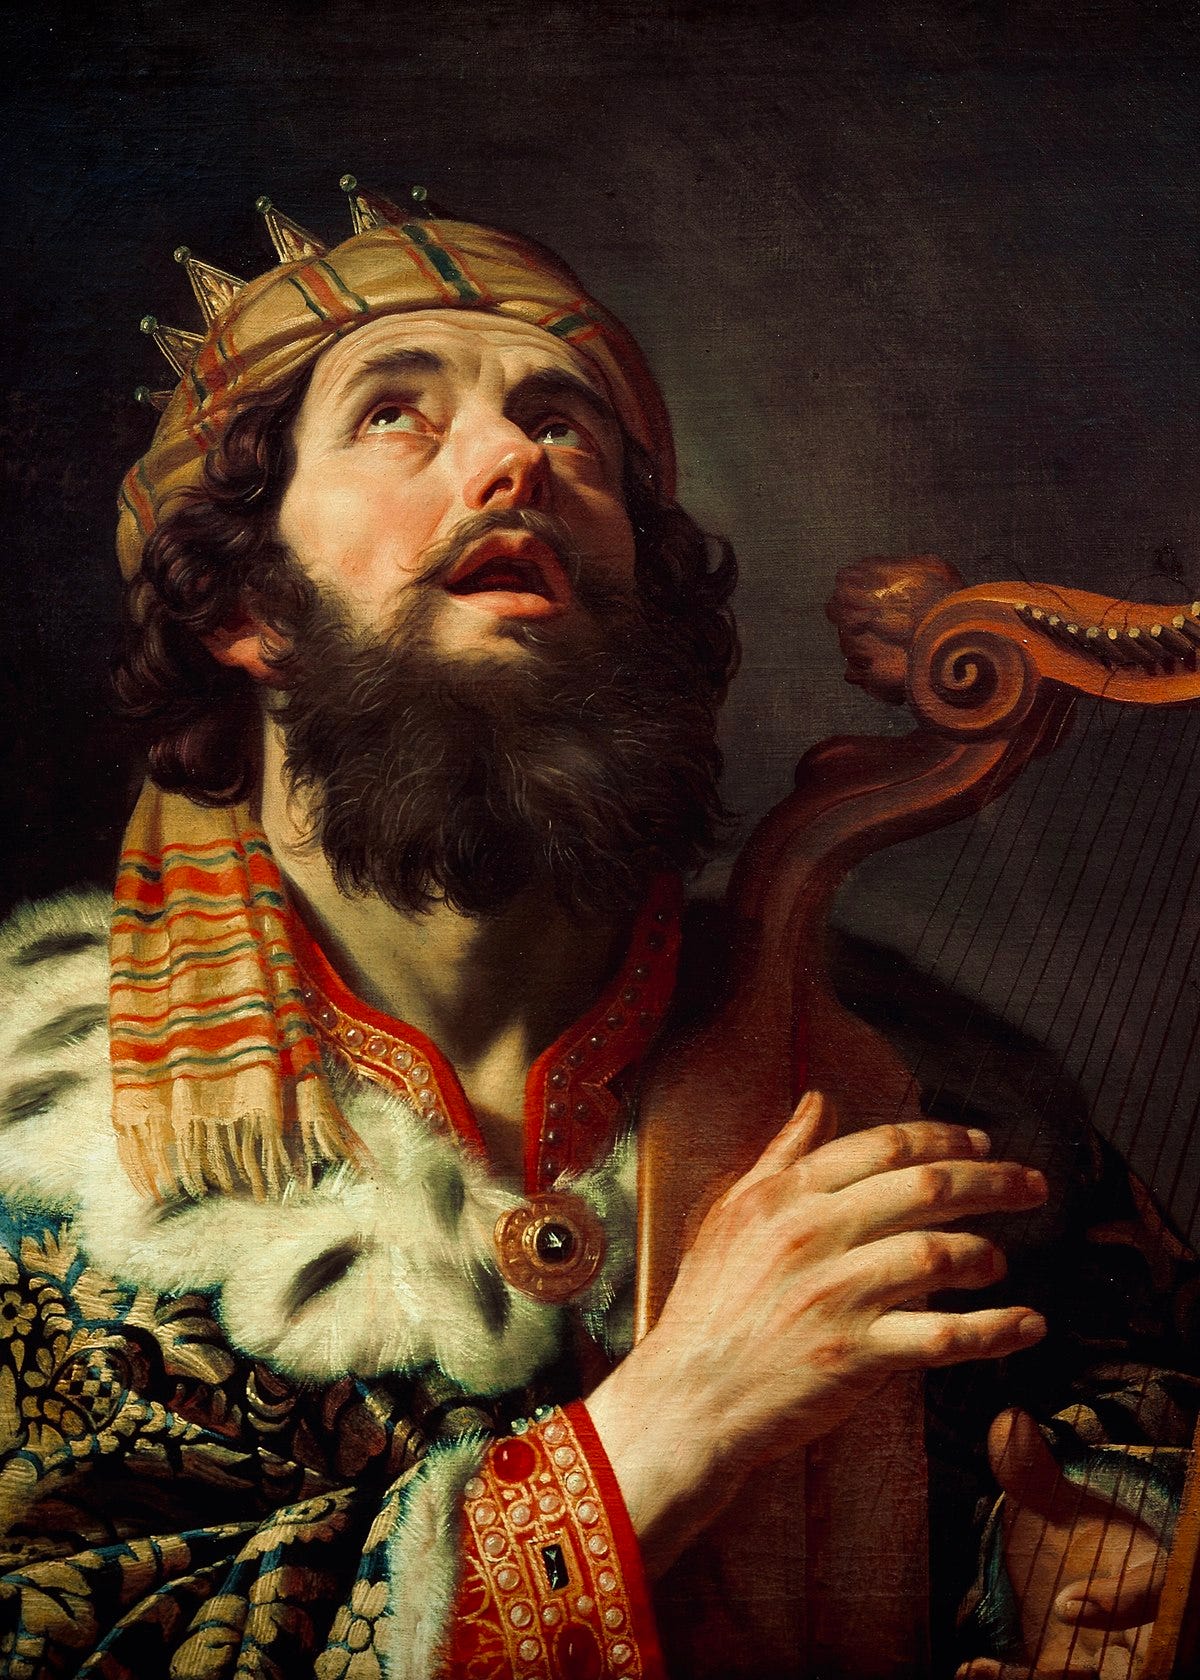 File:King David, the King of Israel.jpg - Wikimedia Commons